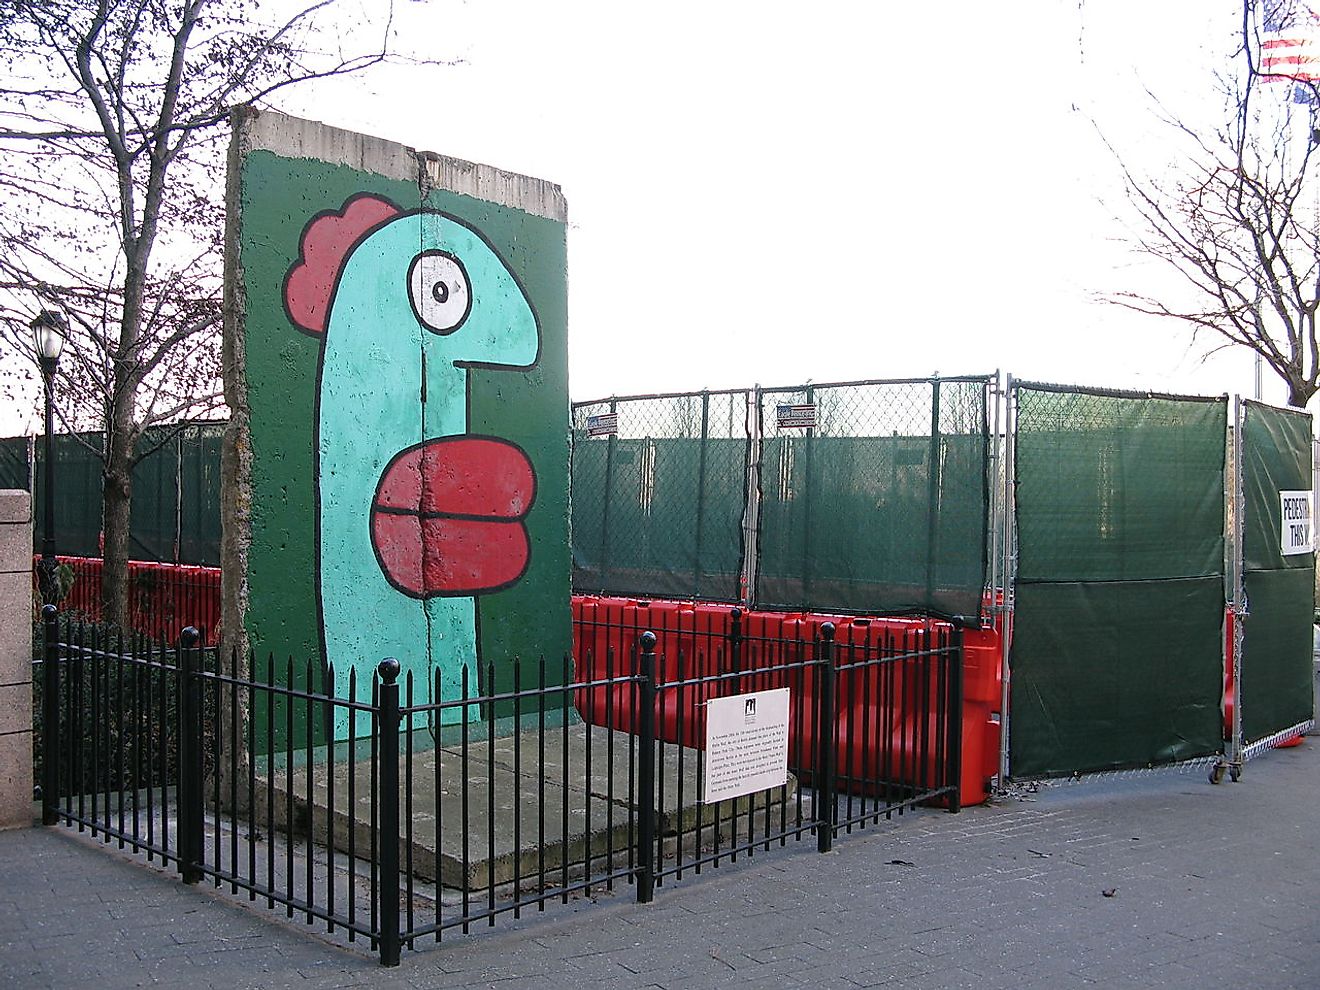 Segment of Berlin wall in New York City. Image credit: Ronny-Bonny/Wikimedia.org